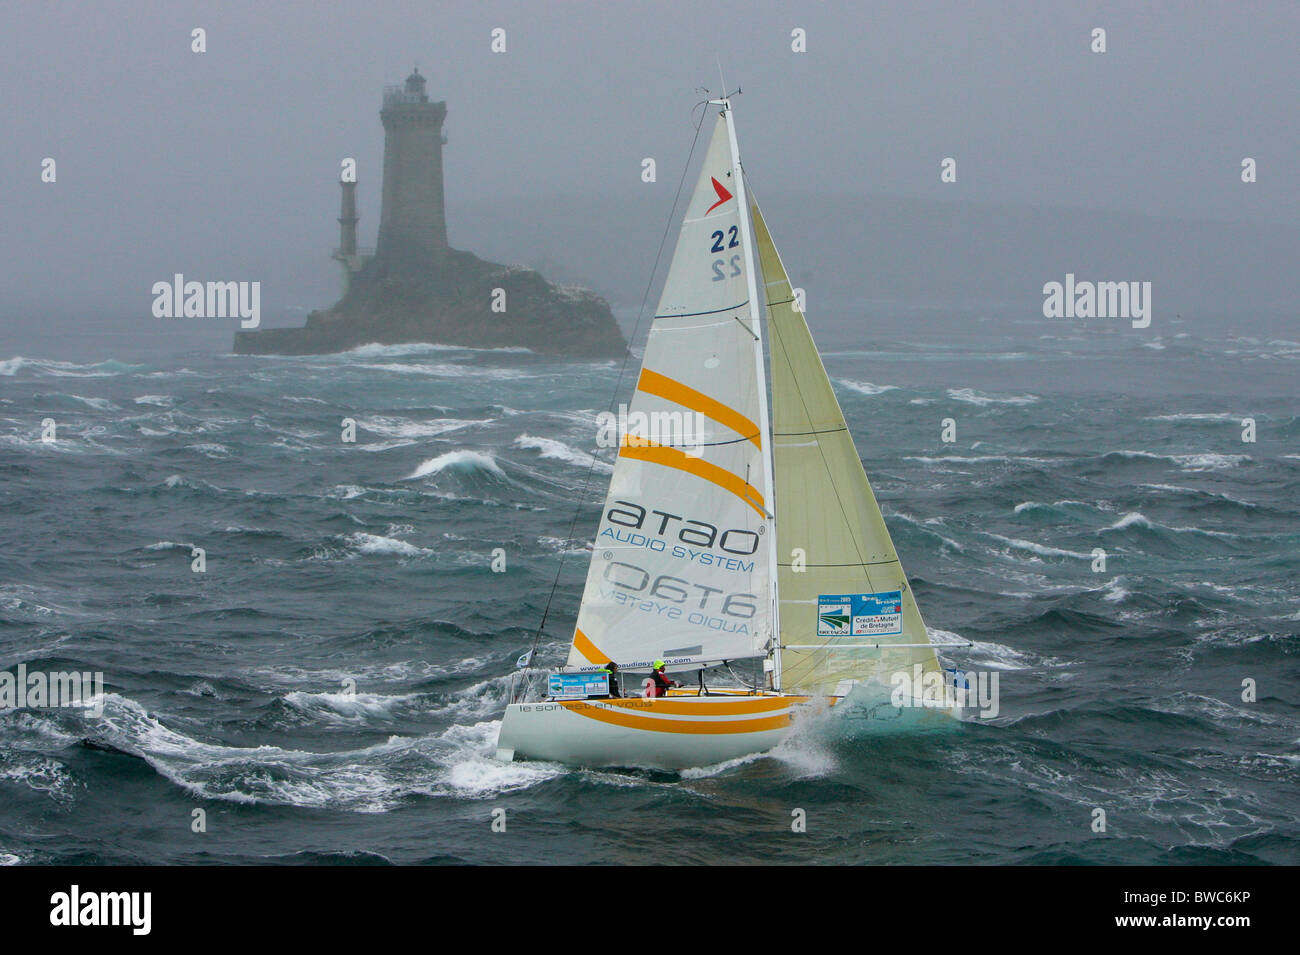 Atao Audiosysteme yacht vorbei Vieille Leuchtturm bei starkem Seegang, Round Bretagne Race 2005 Stockfoto